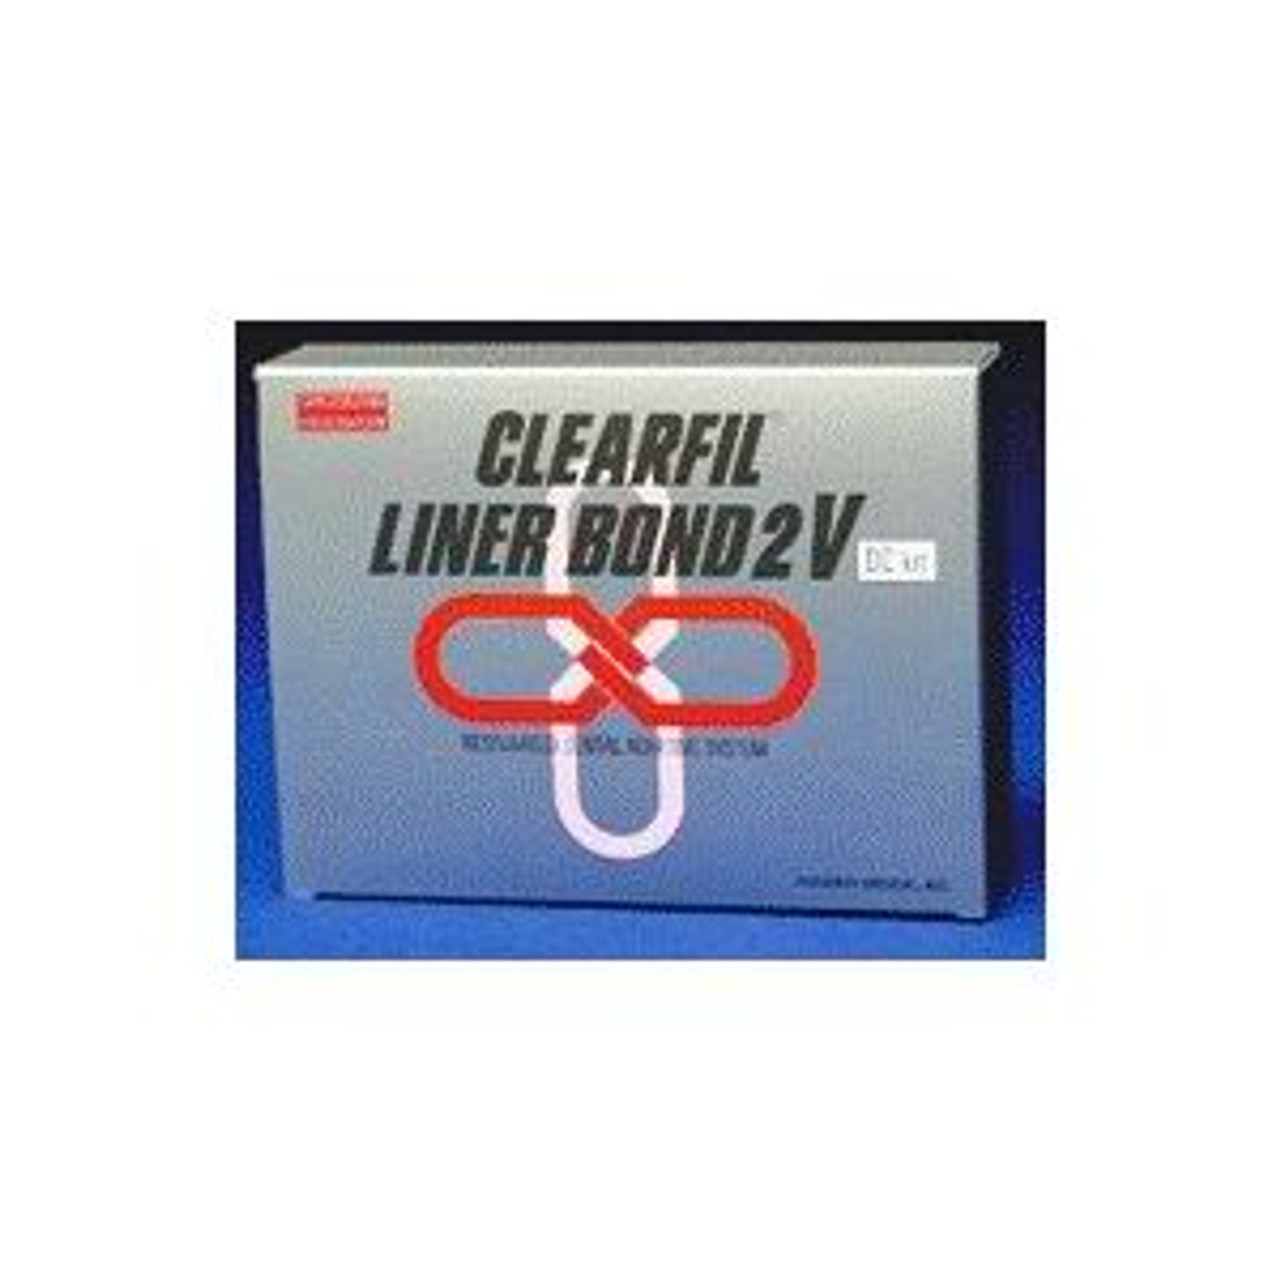 Kuraray - Clearfil Liner Bond 2V: Bond B